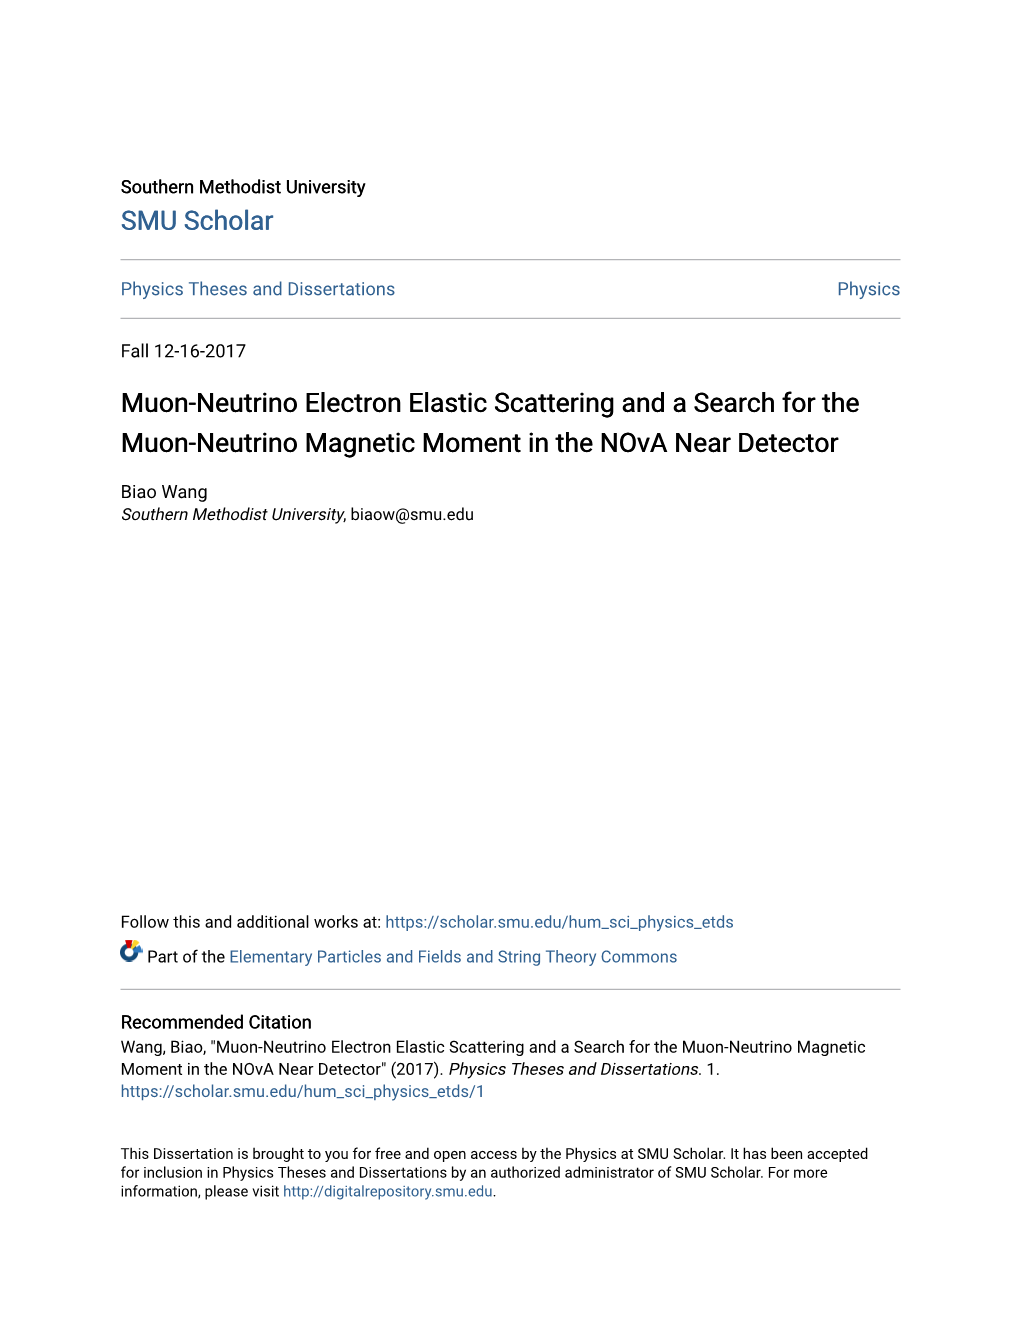 Muon-Neutrino Electron Elastic Scattering and a Search for the Muon-Neutrino Magnetic Moment in the Nova Near Detector